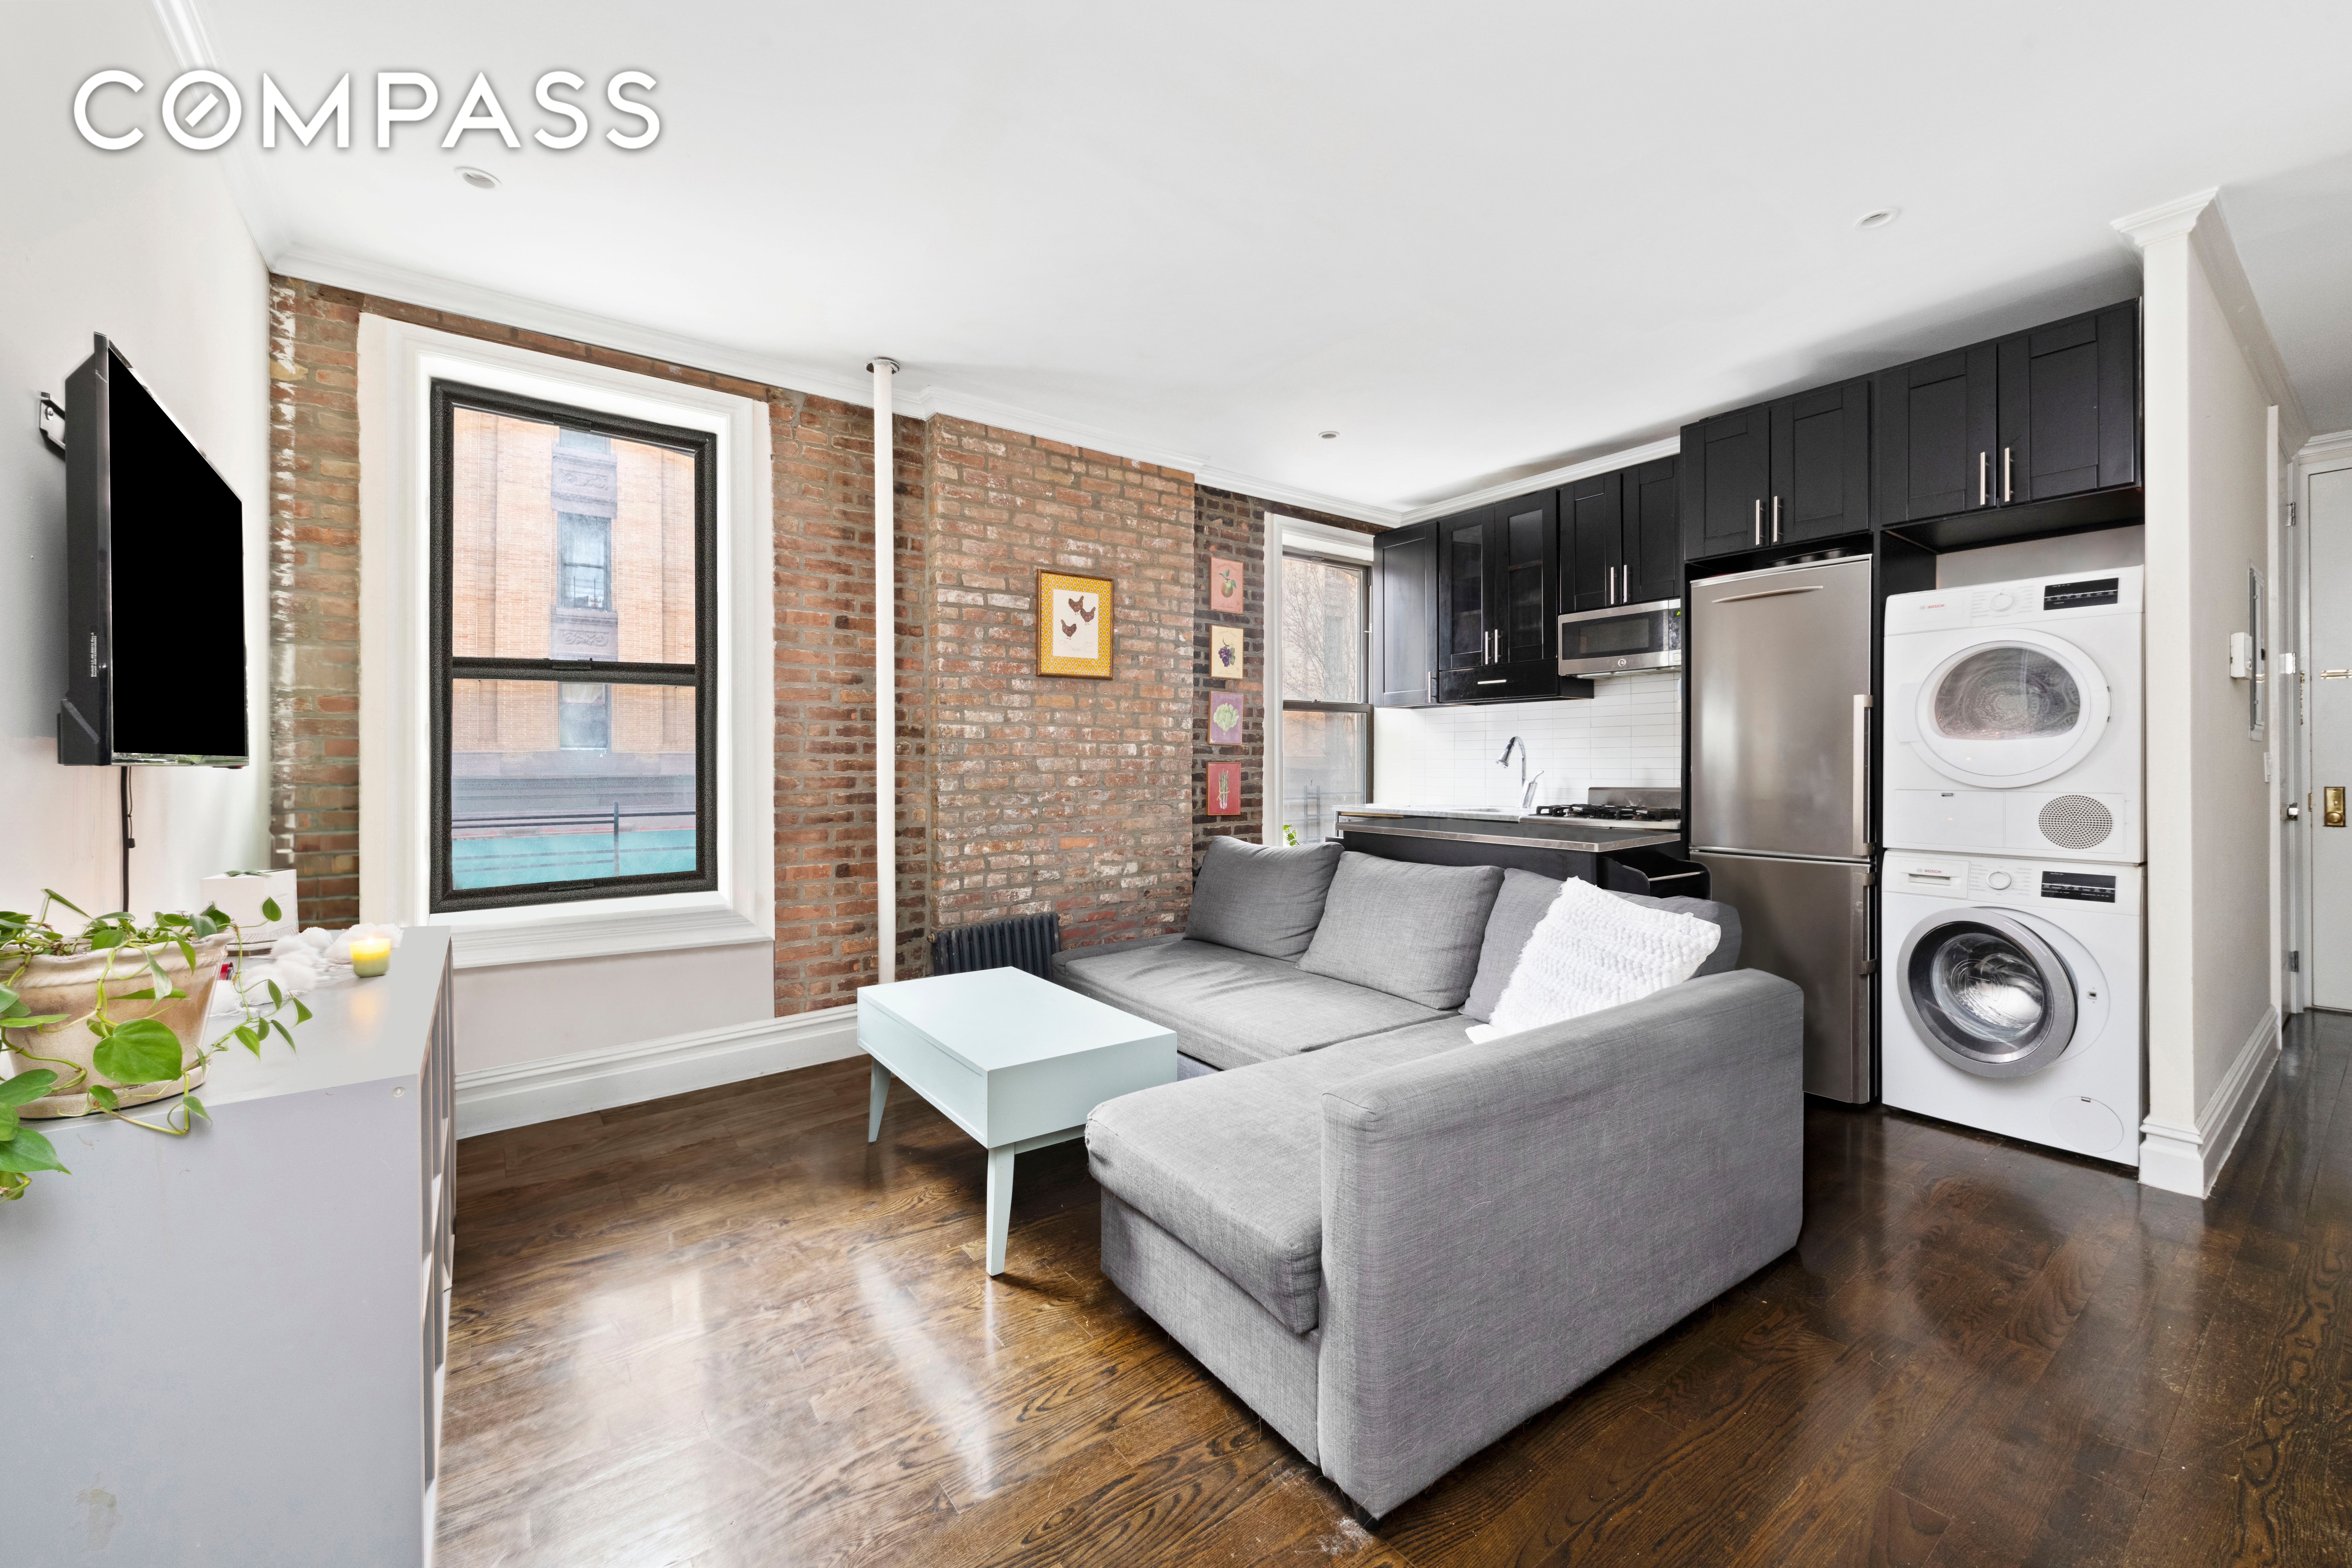 170 West 83rd Street 2W, Upper West Side, Upper West Side, NYC - 4 Bedrooms  
2 Bathrooms  
6 Rooms - 